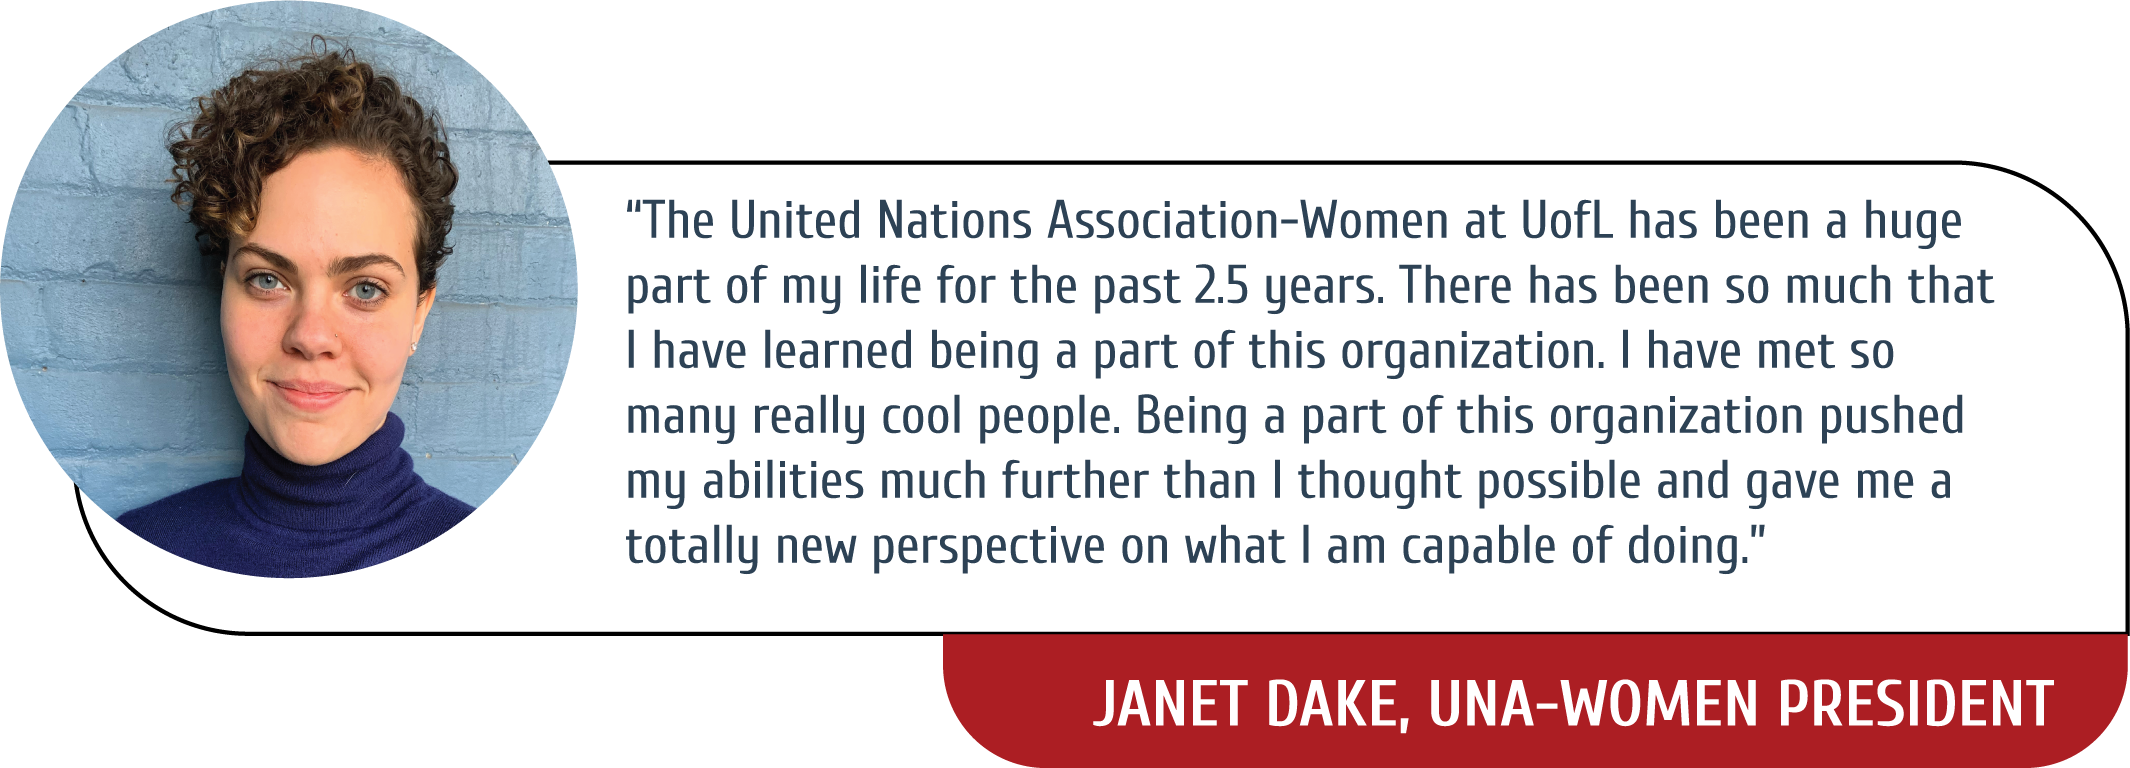 Janet Dake Quote 